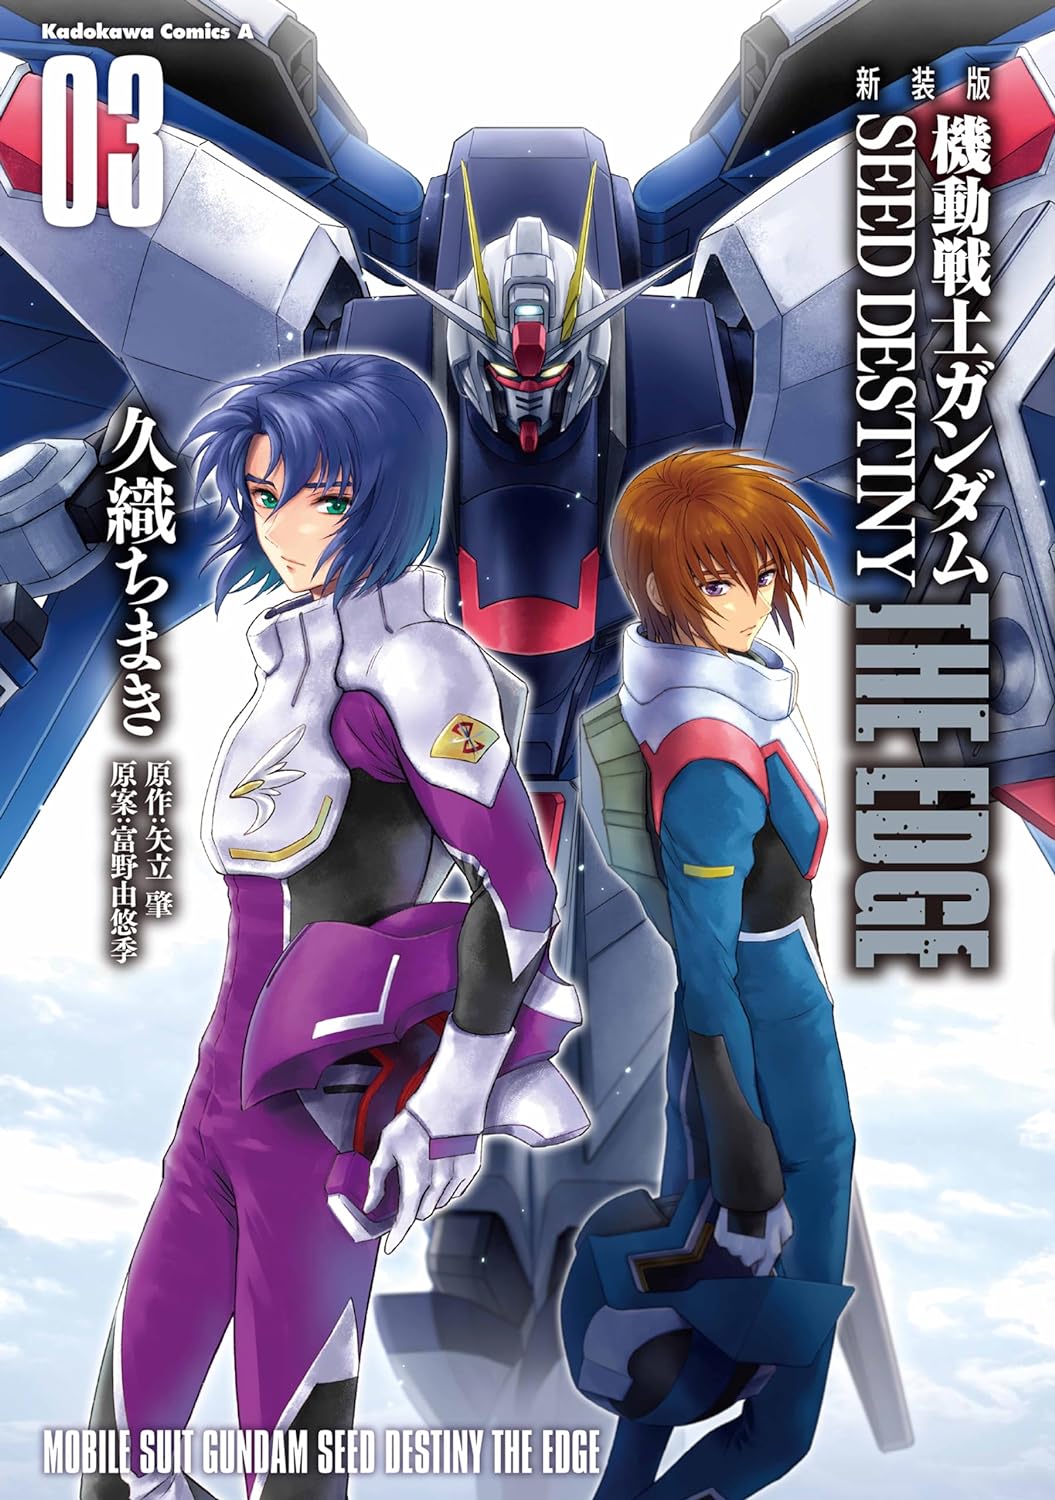 Mobile Suit Gundam SEED Destiny: The Edge #3 /Comic